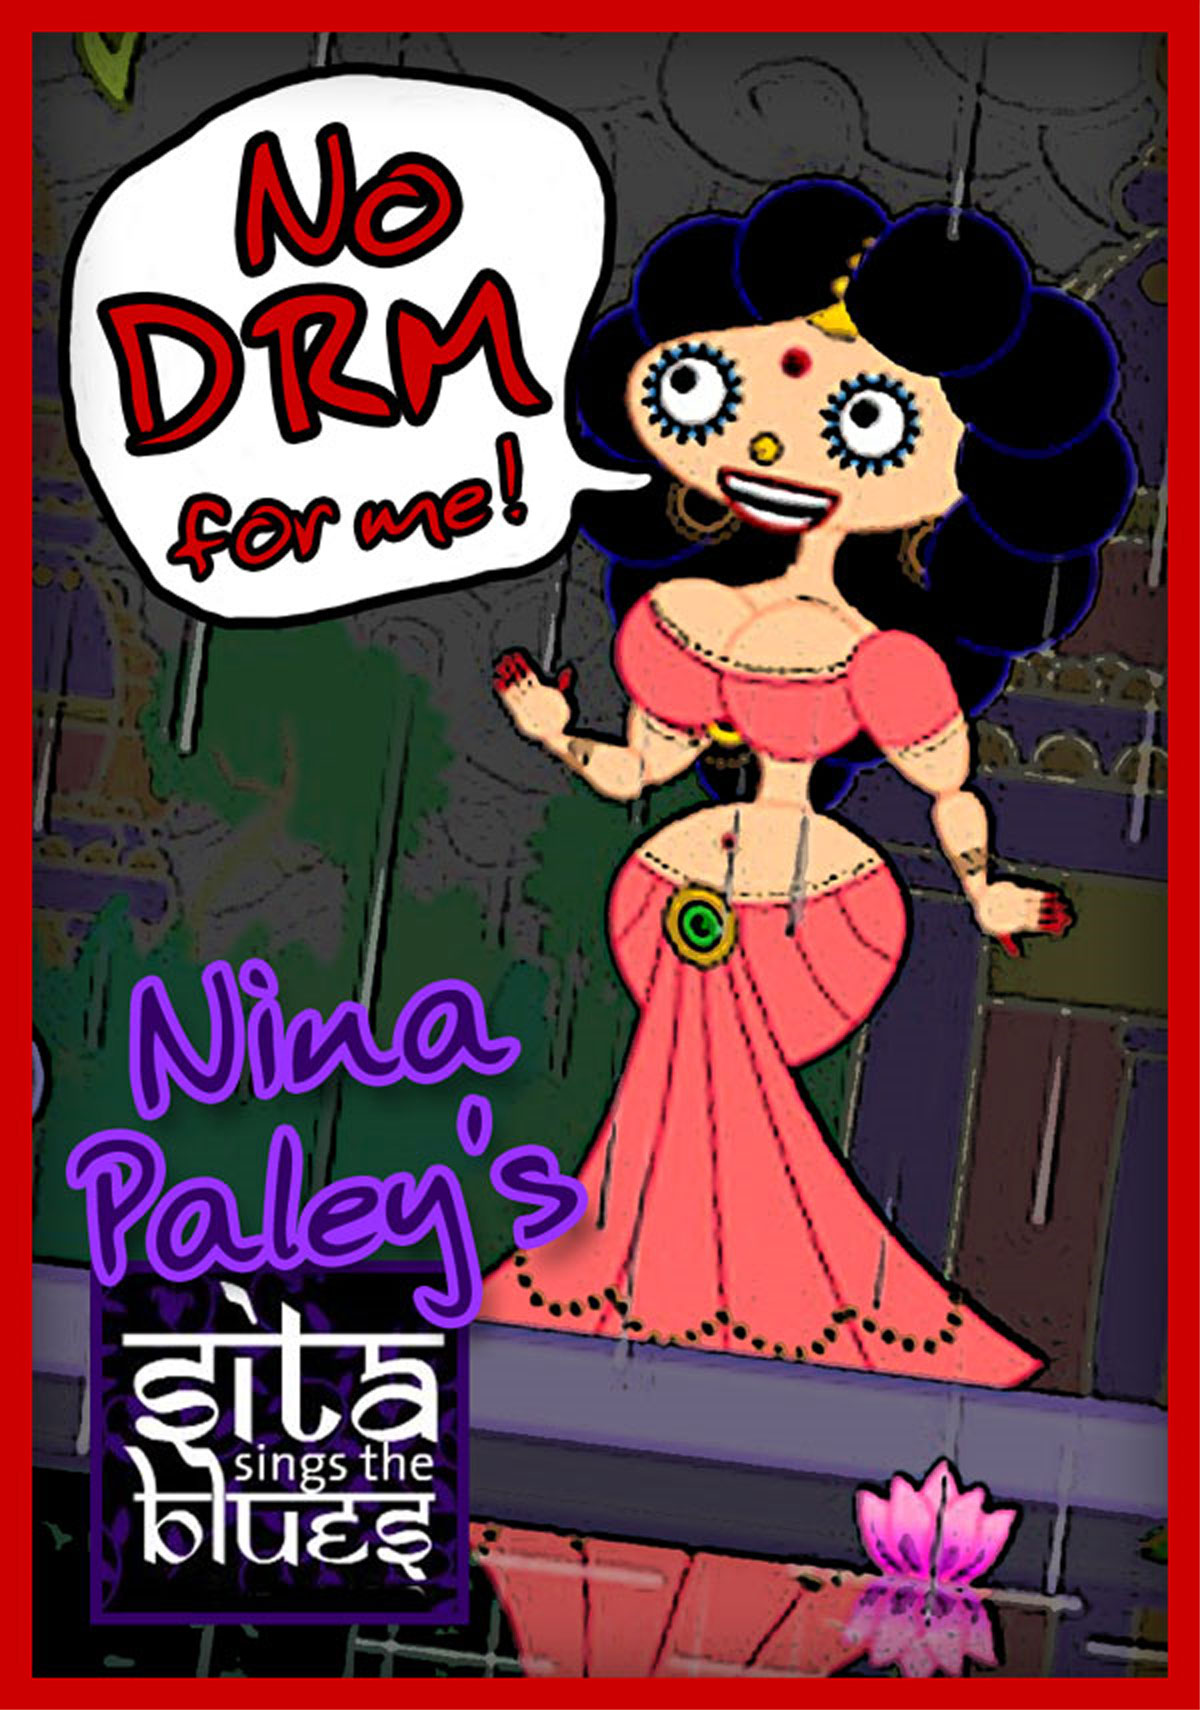 Sita No DRM mini poster